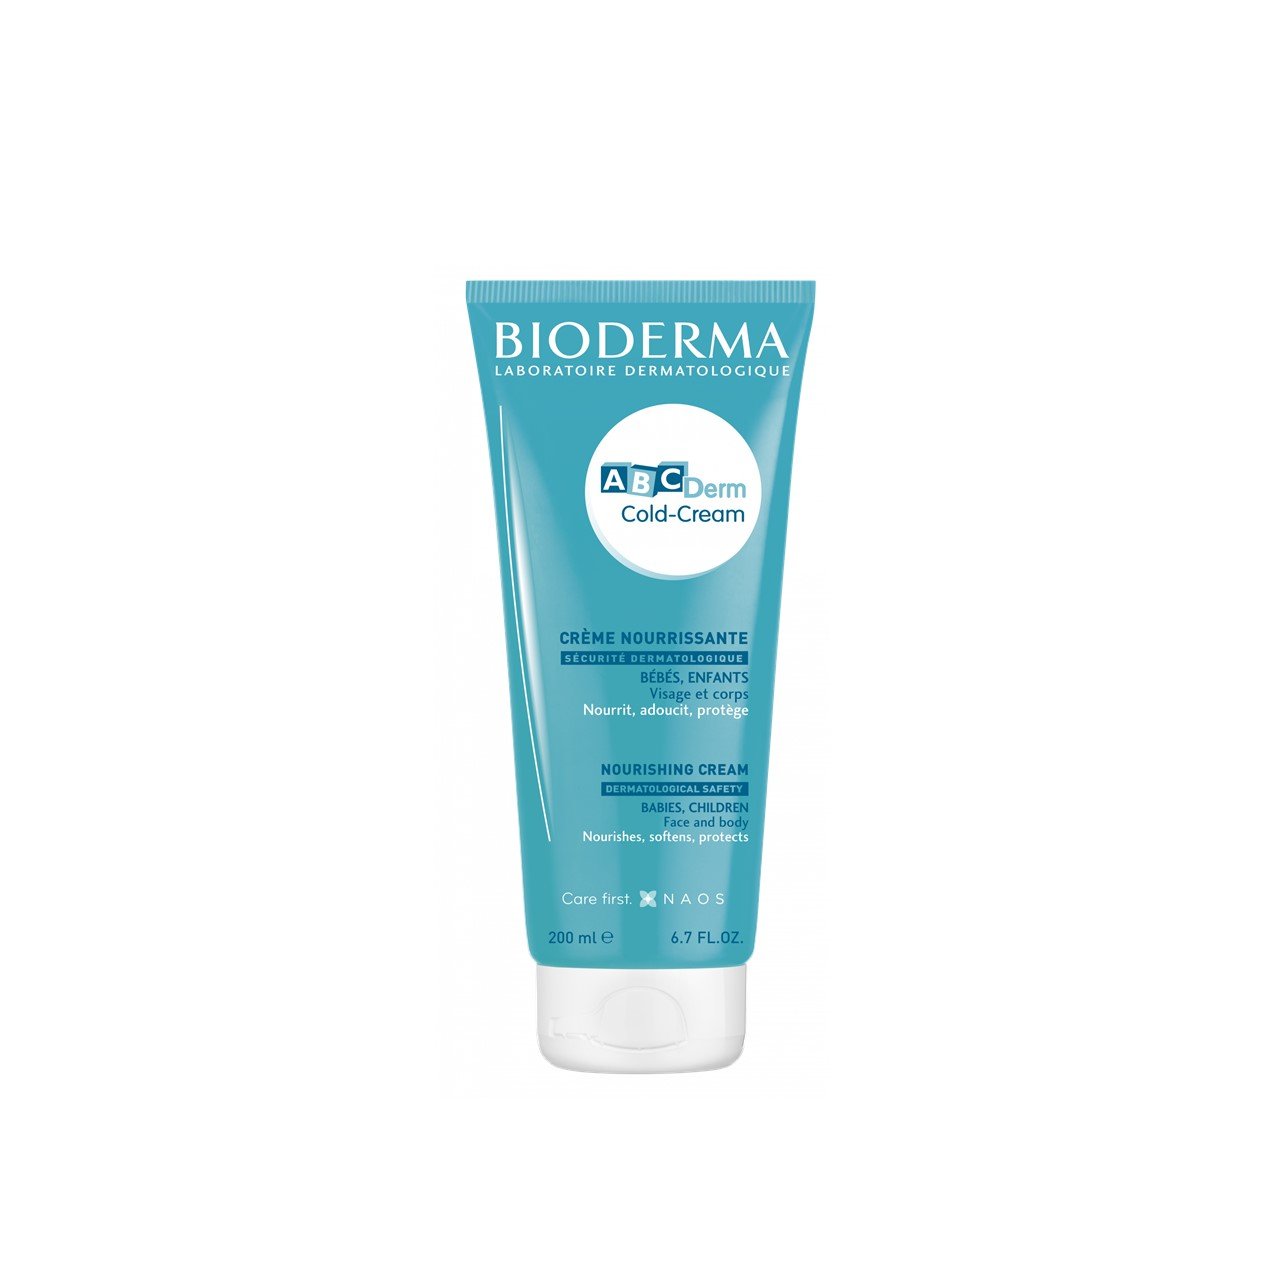 Bioderma ABCDerm Cold-Cream Nourishing Cream 200ml (6.76fl oz)